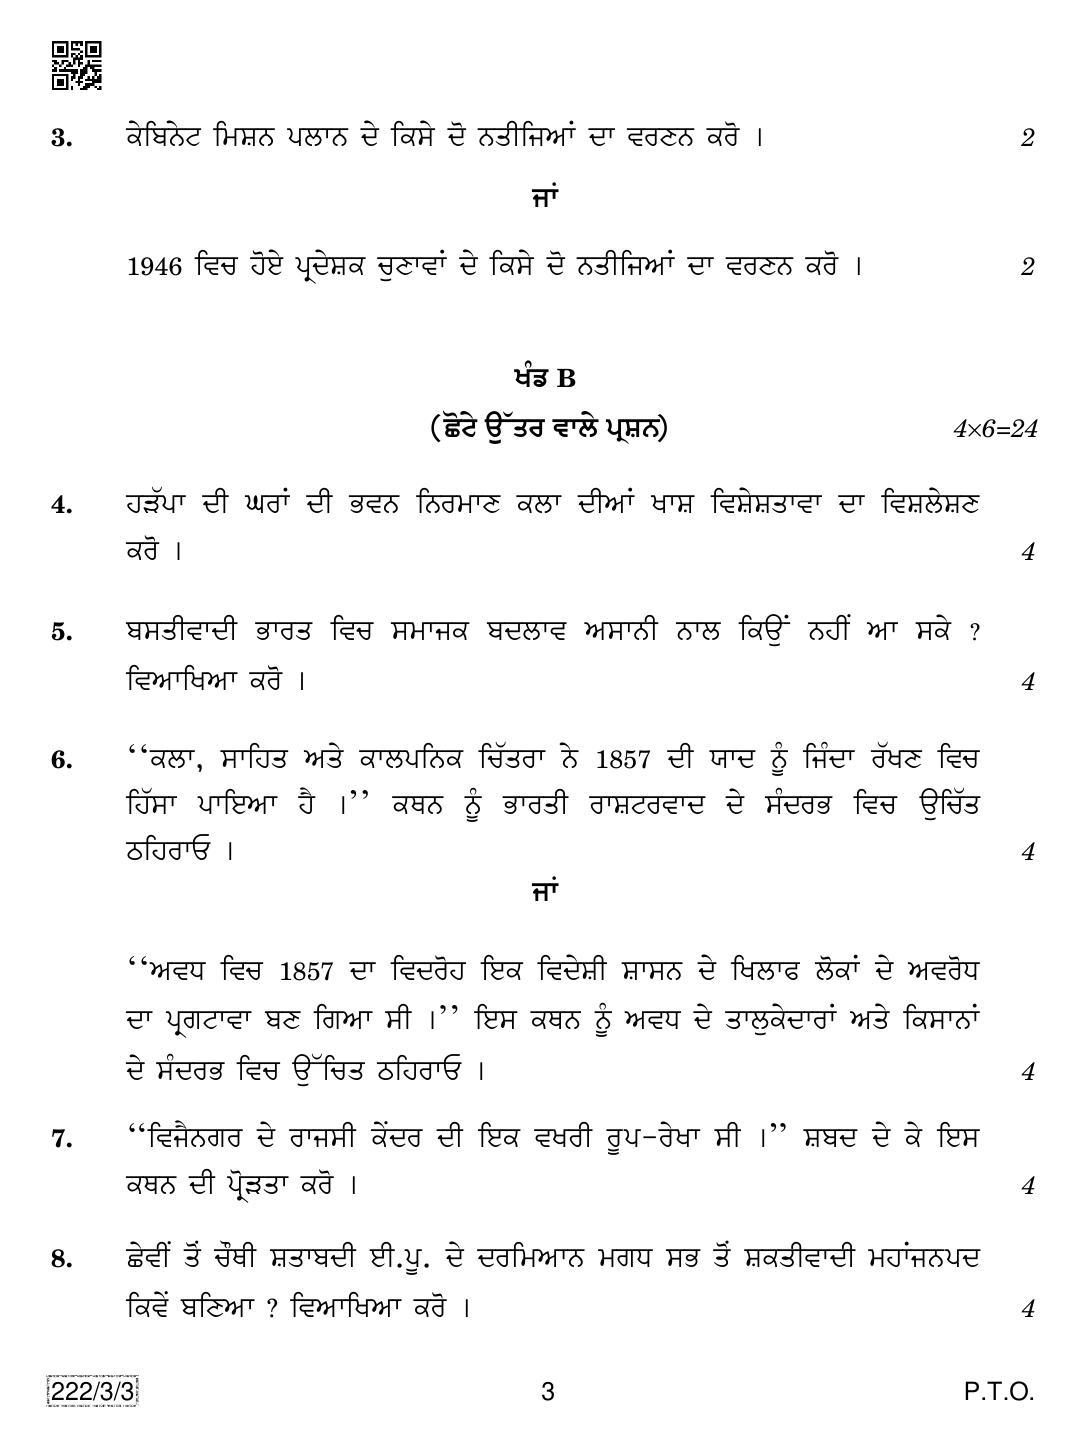 CBSE Class 12 222-3-3 Hiastory (Punjabi) 2019 Question Paper - Page 3